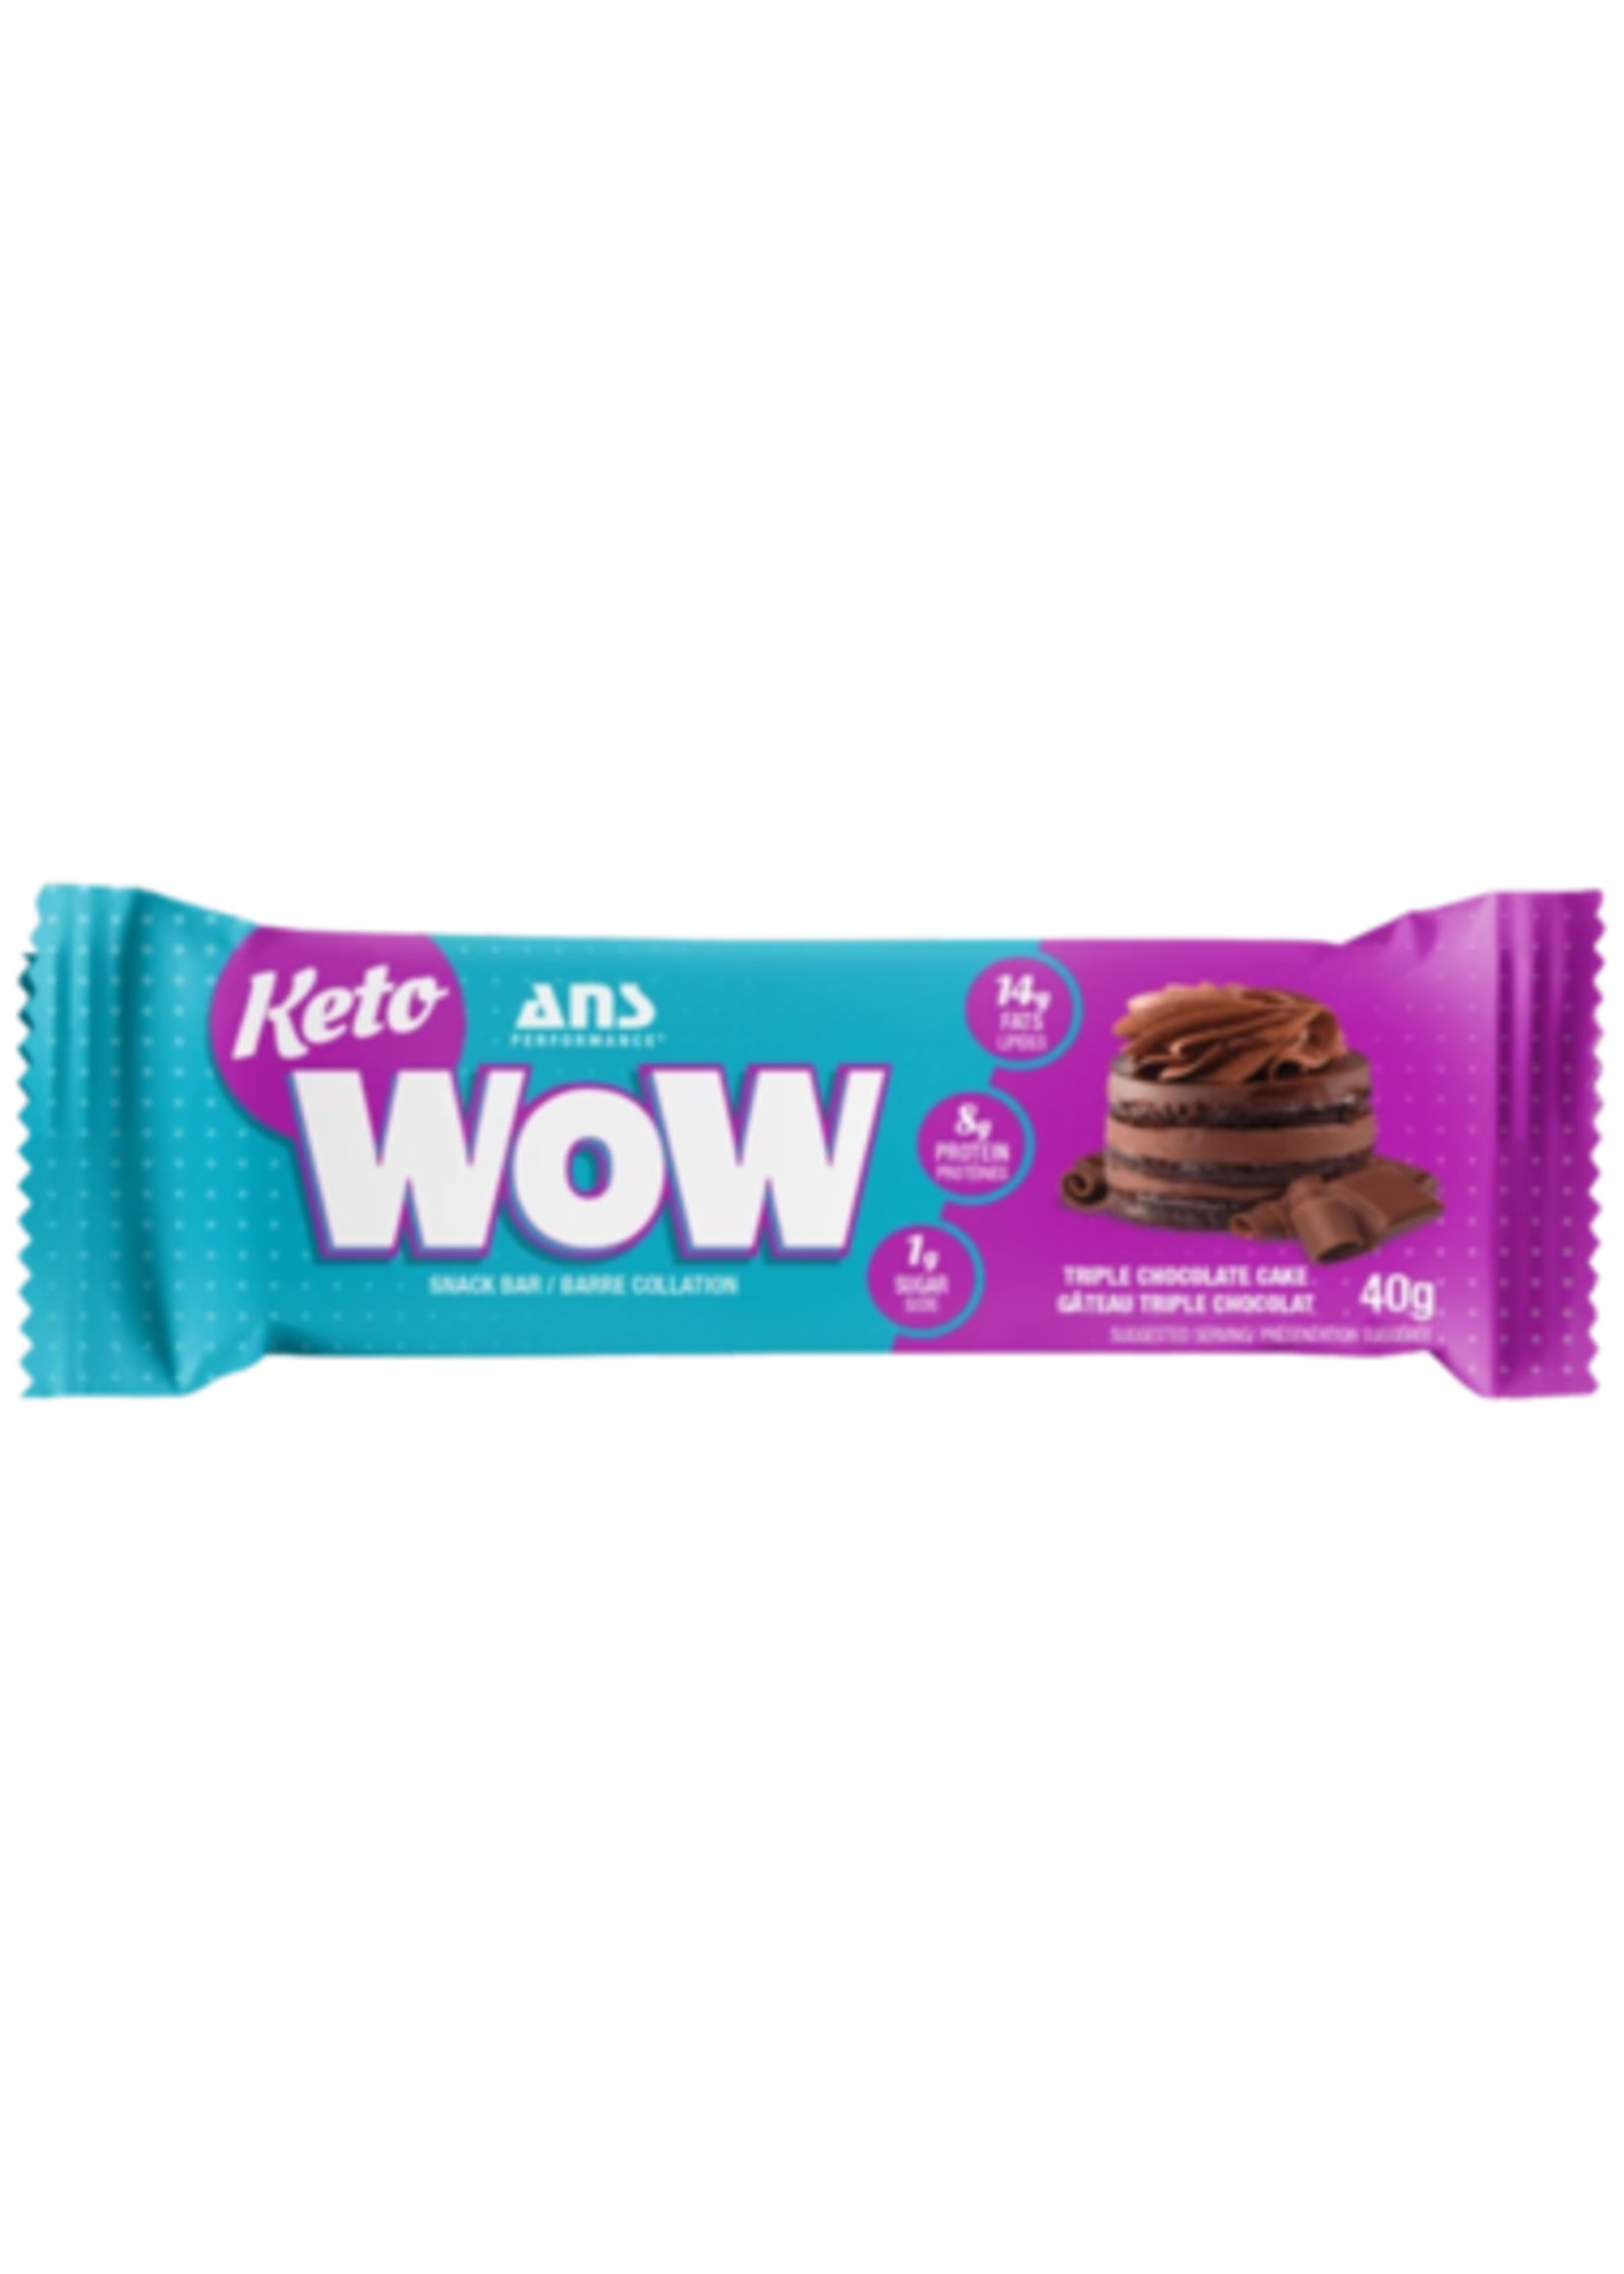 ANS Performance ANS Wow Keto Bars Triple Chocolate (Singles)